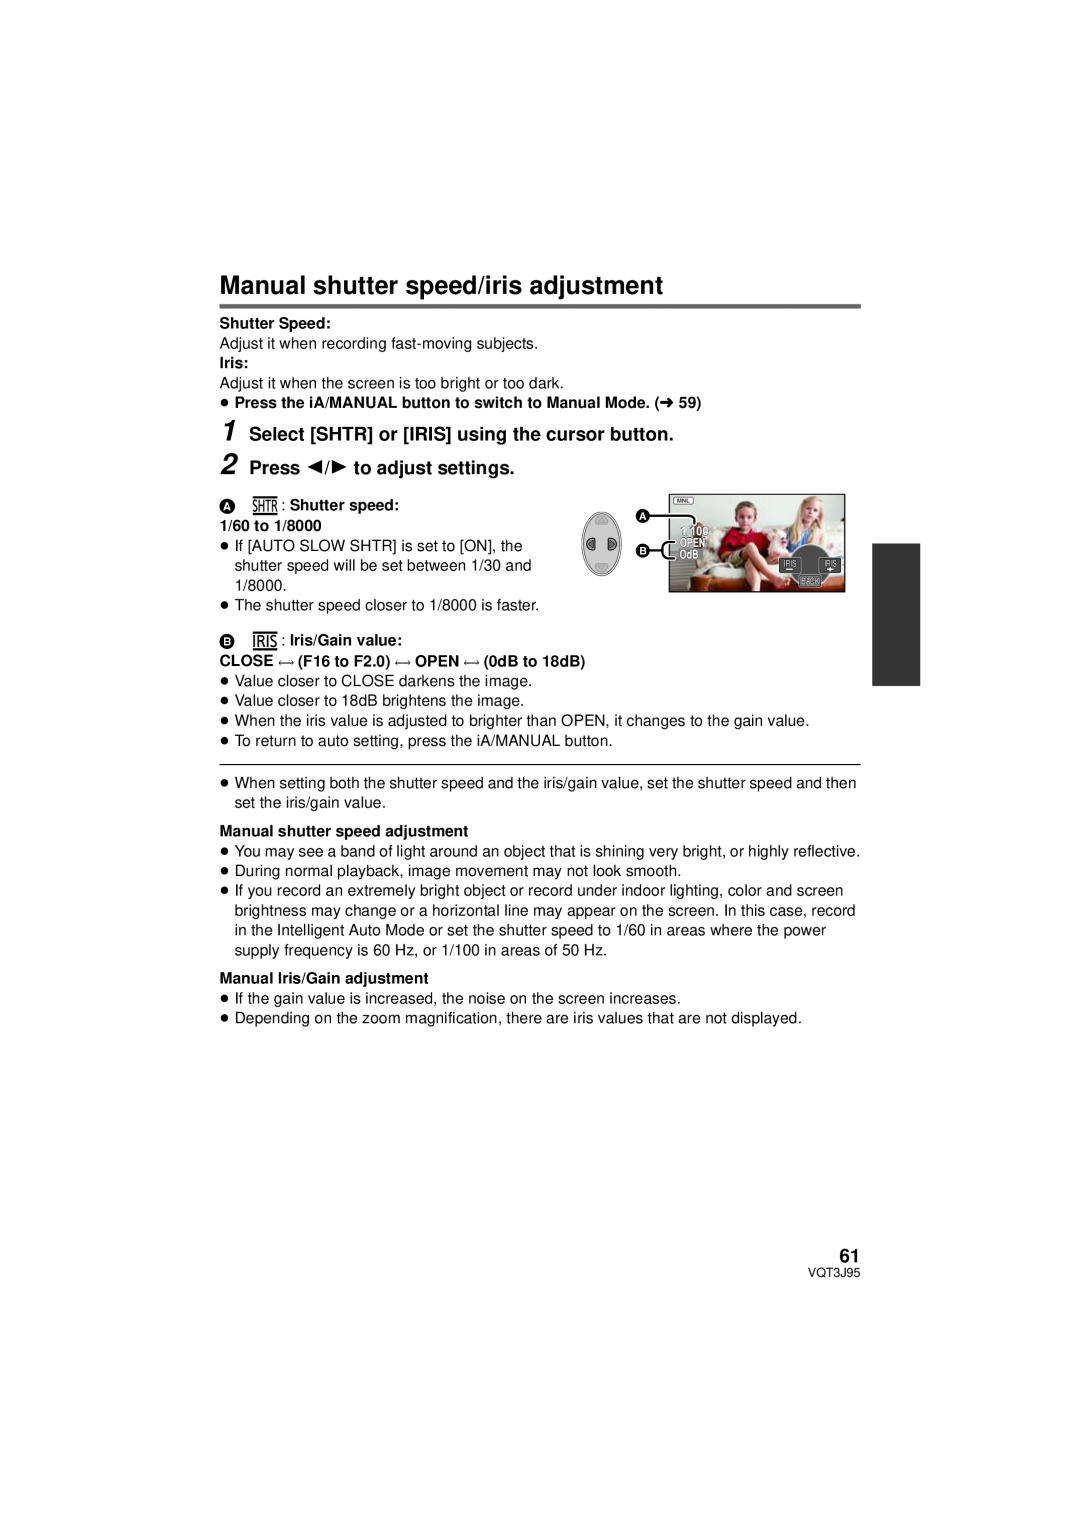 Panasonic HDC-TM41P/PC Manual shutter speed/iris adjustment, Select SHTR or IRIS using the cursor button, Shutter Speed 